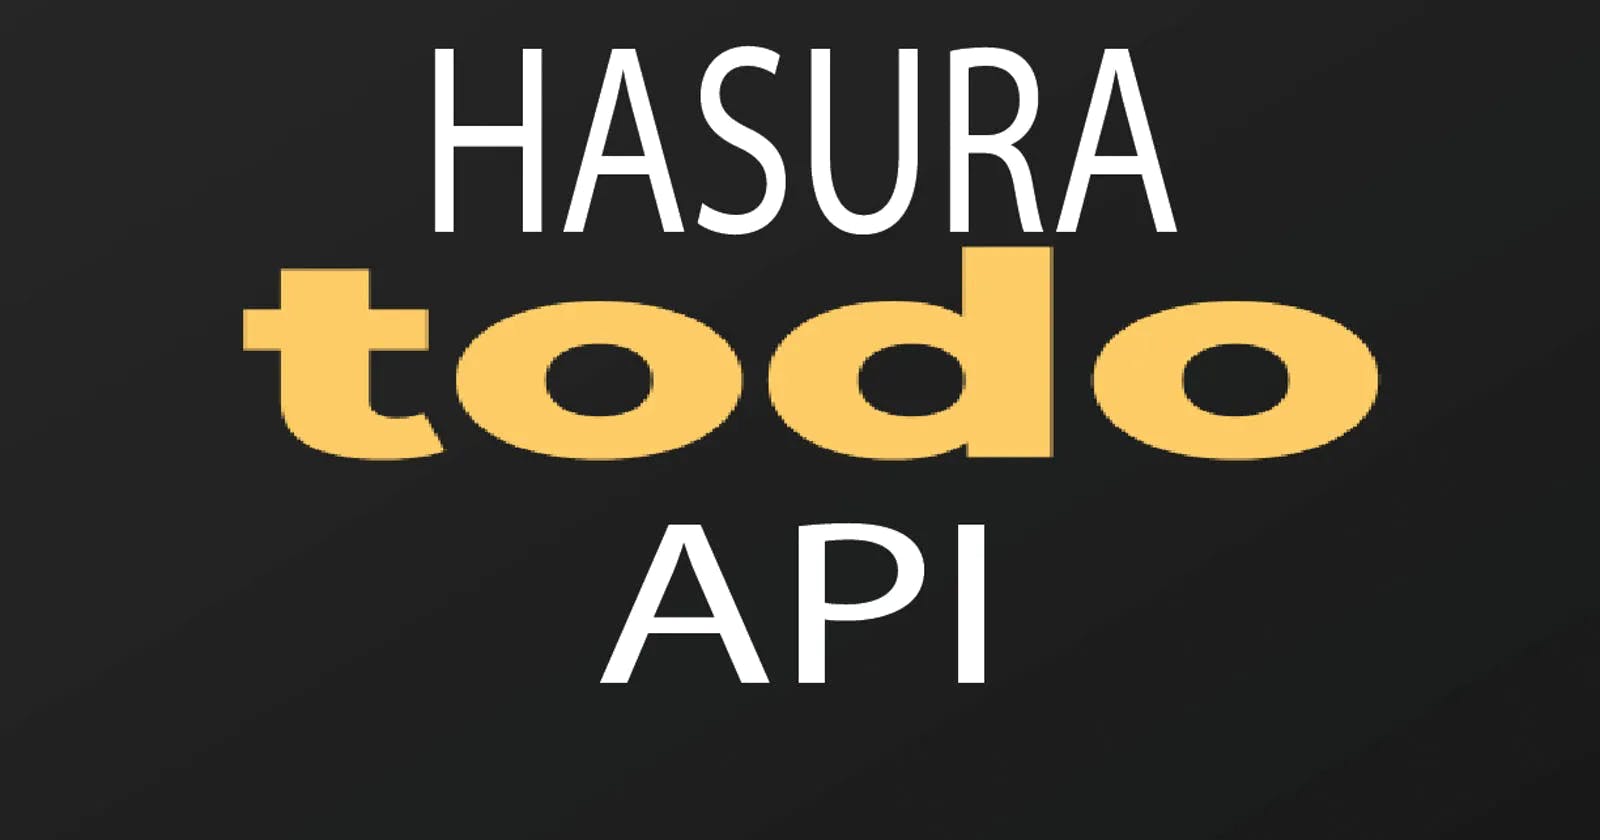 Volume 2: Hasura Todo API - More details and finish with API development.